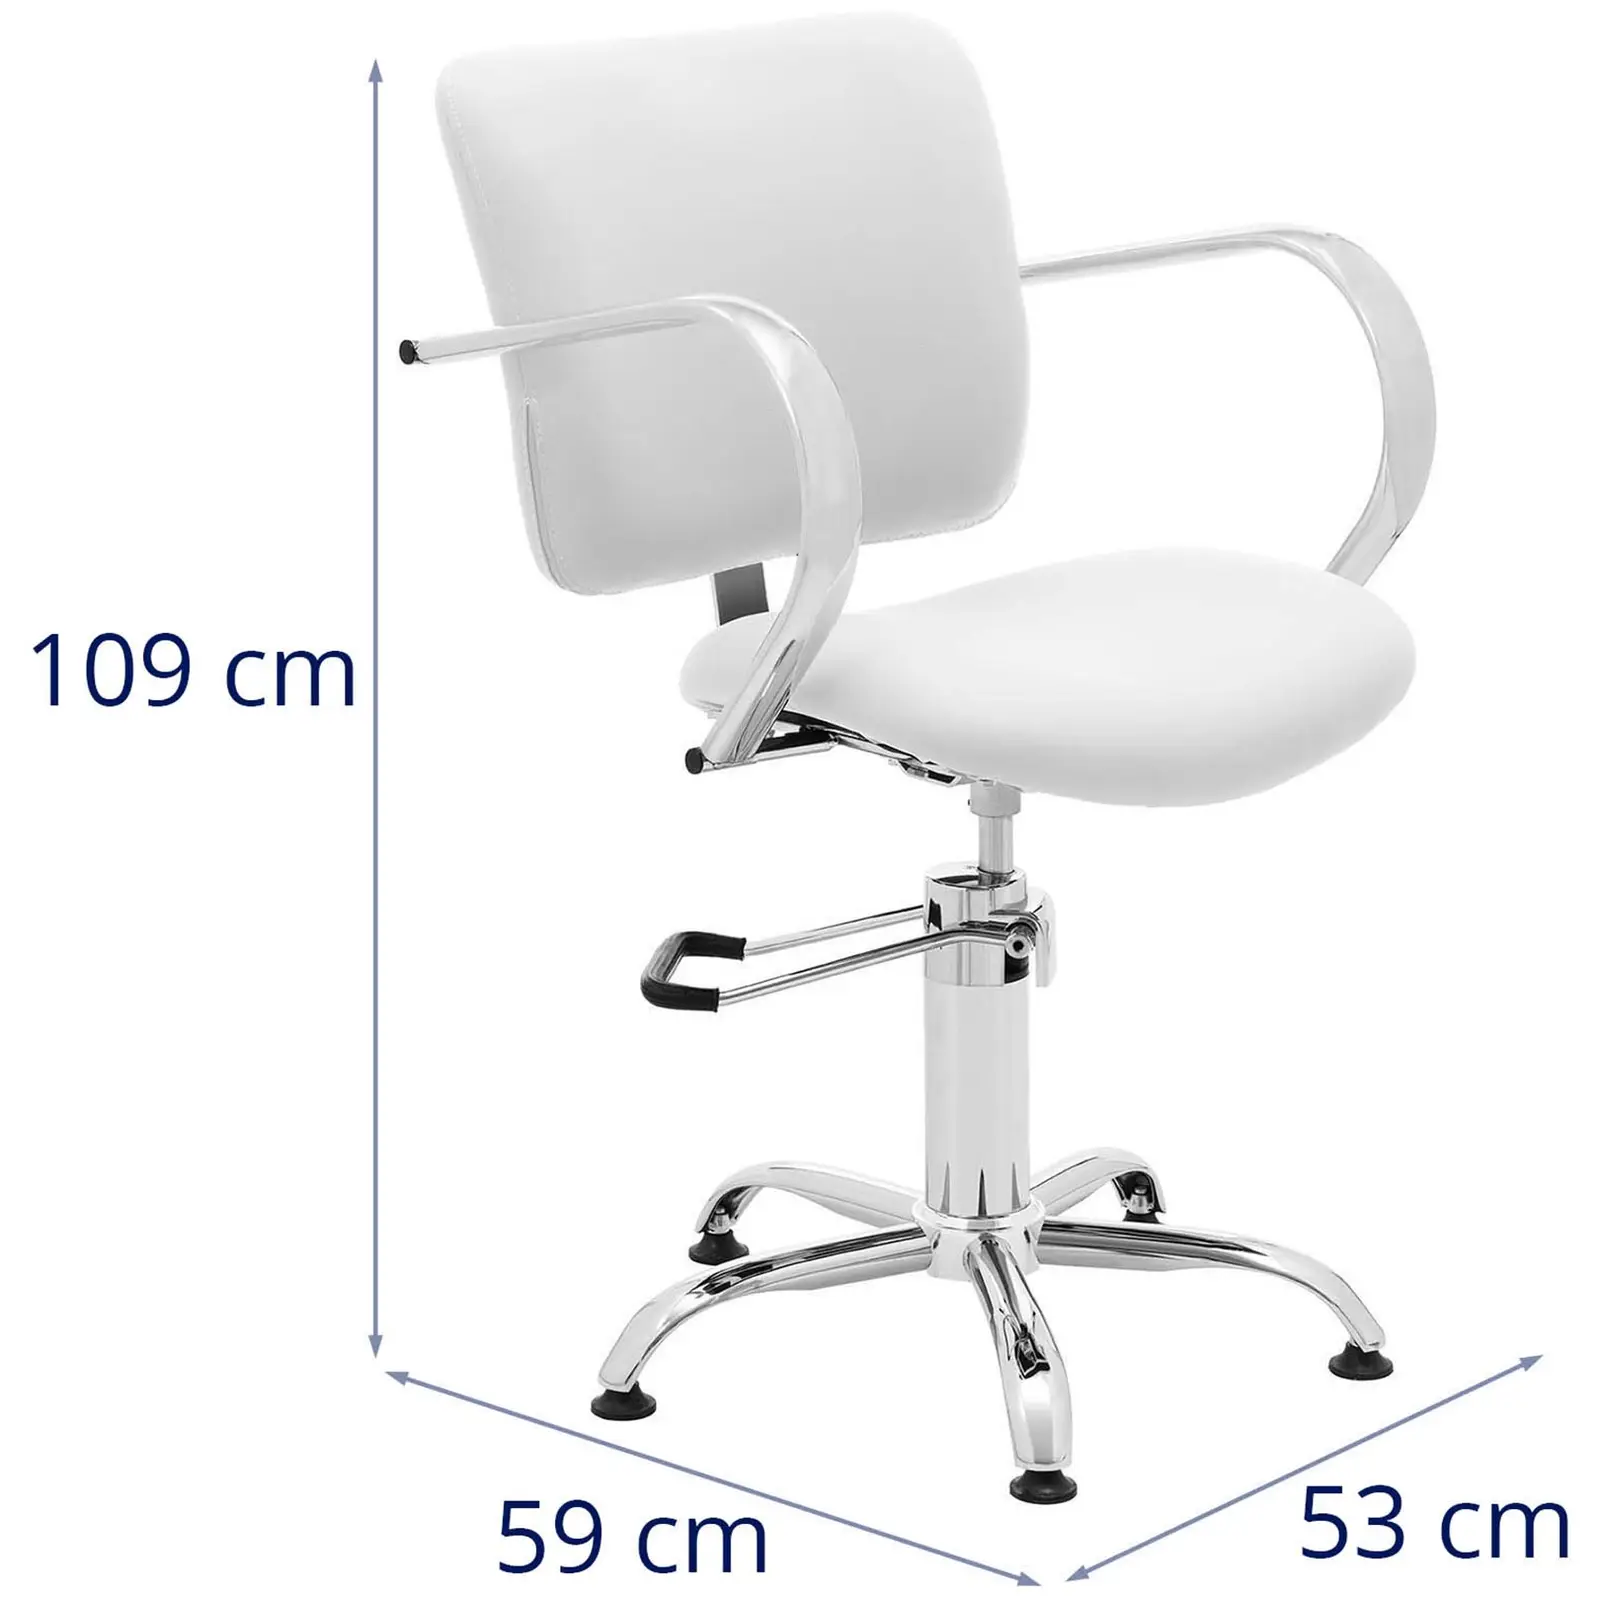 fauteuil coiffure - 590 - 720 mm - 150 kg - Blanc